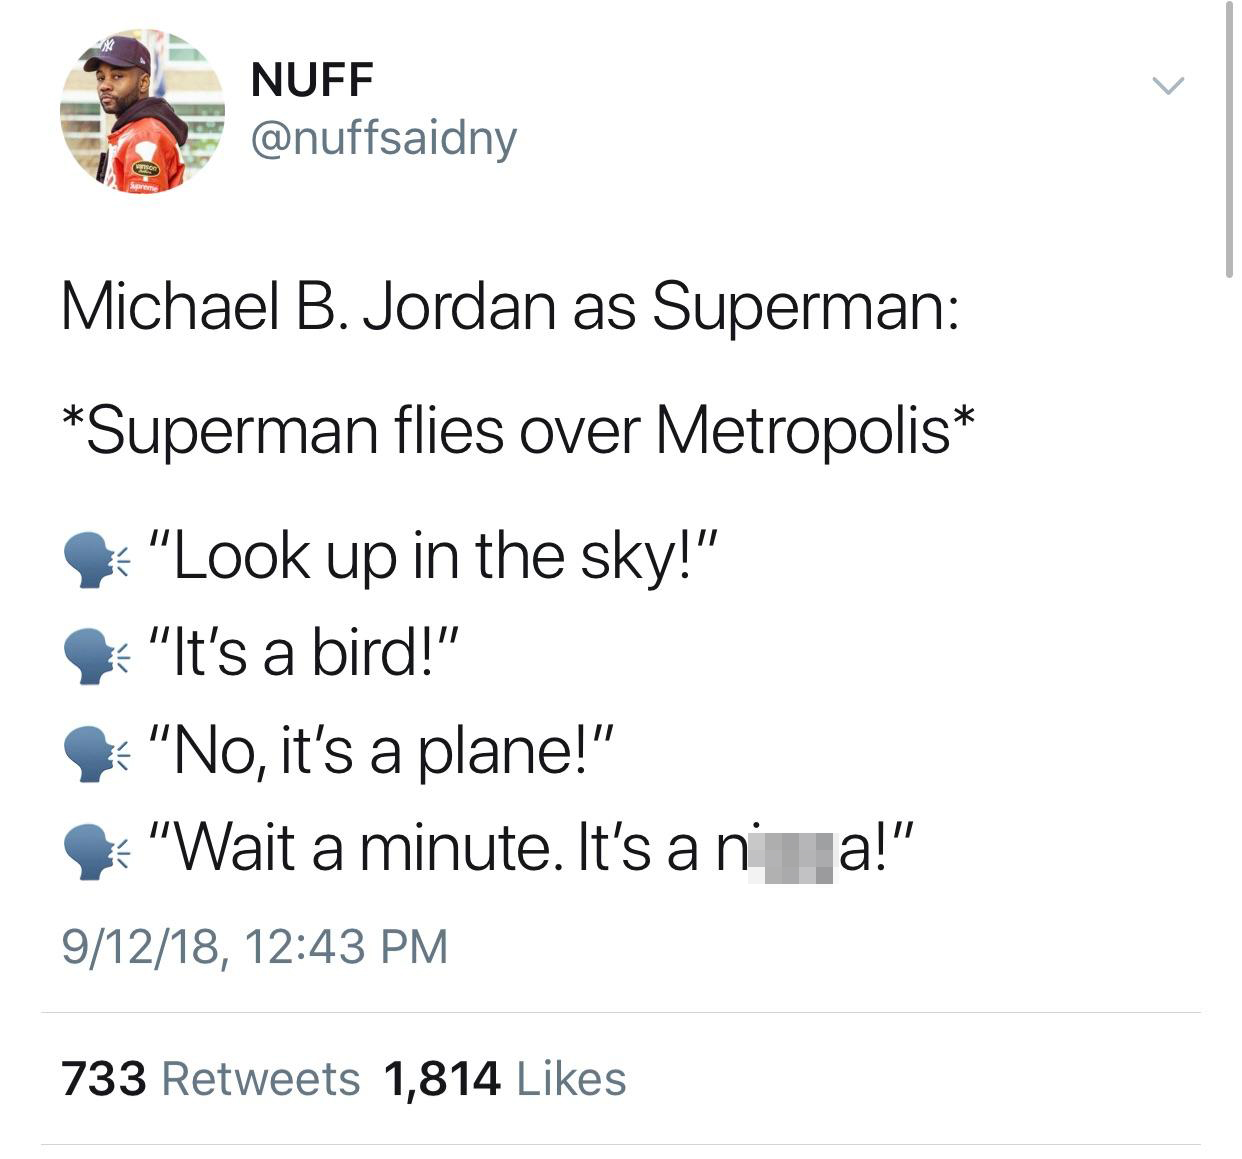 memes - document - Nuff Casco Michael B. Jordan as Superman Superman flies over Metropolis "Look up in the sky!" "It's a bird!" "No, it's a plane!" "Wait a minute. It's a nia!" 91218, 733 1,814